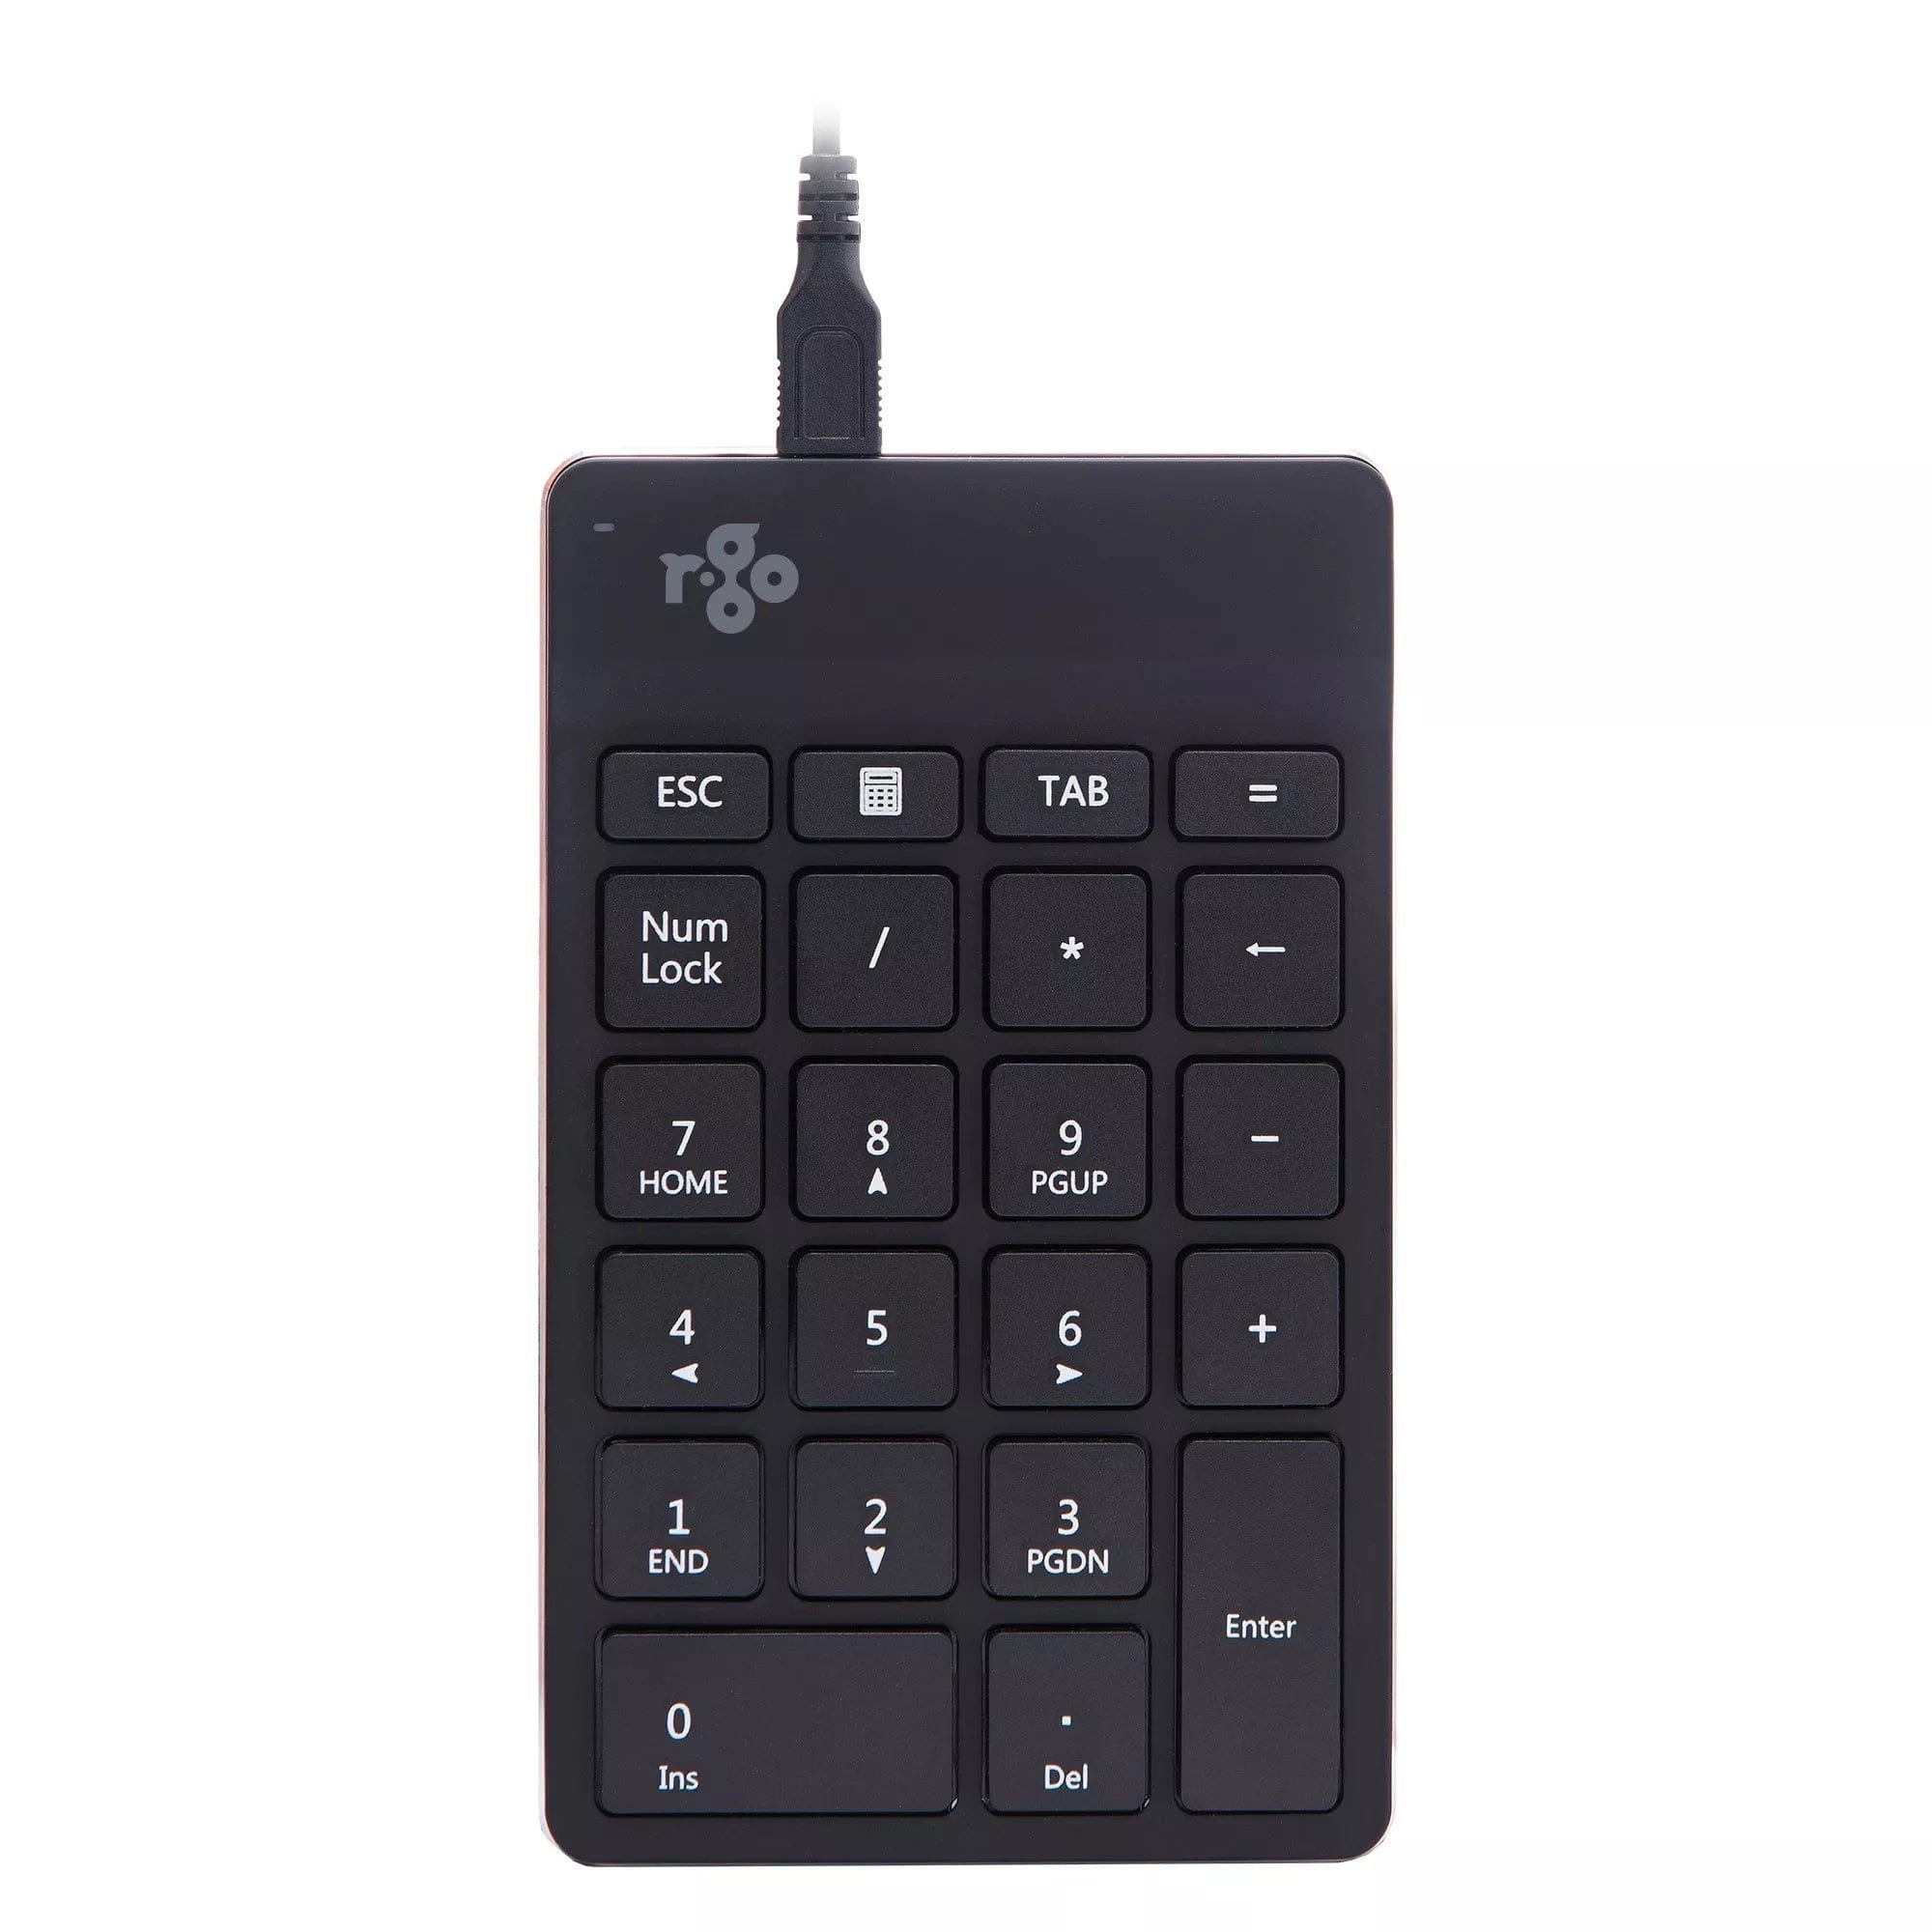  Ergo-R numeriskt tangentbord - hand-arm, mus-tangentbord, Tangentbord, Trådbundna tangentbord - ErgoFinland